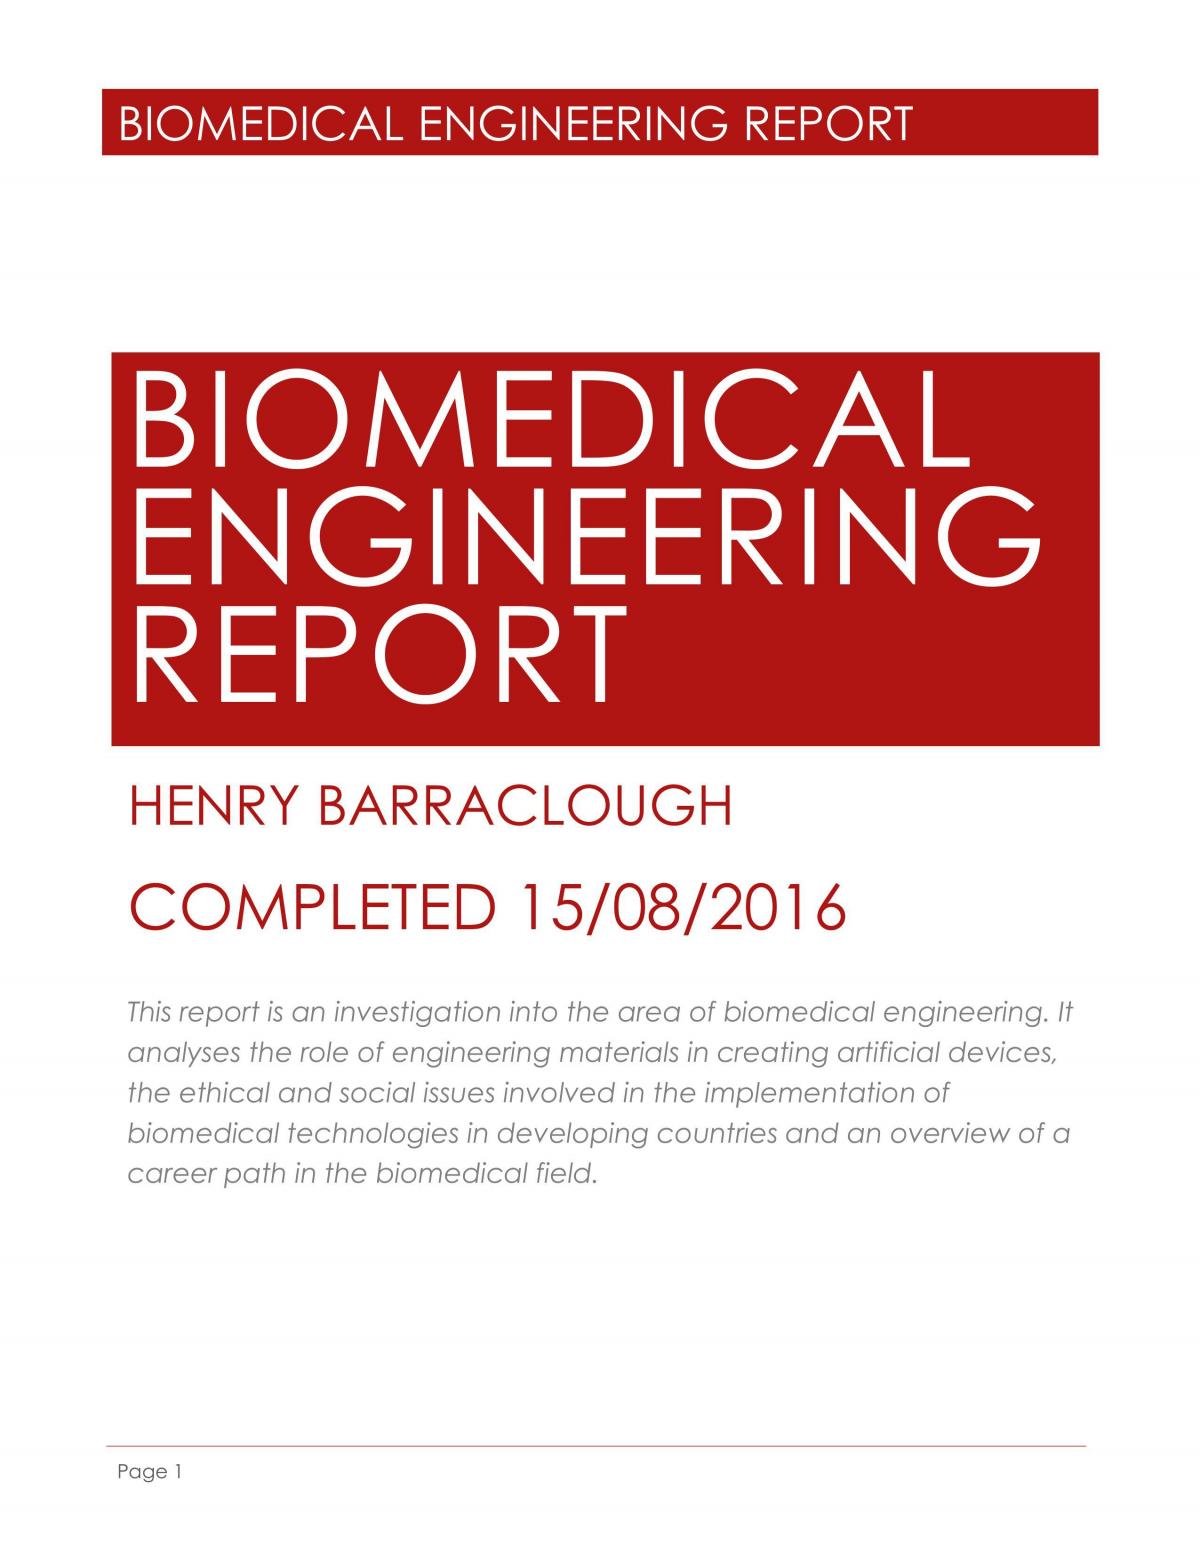 essay on biomedical engineering